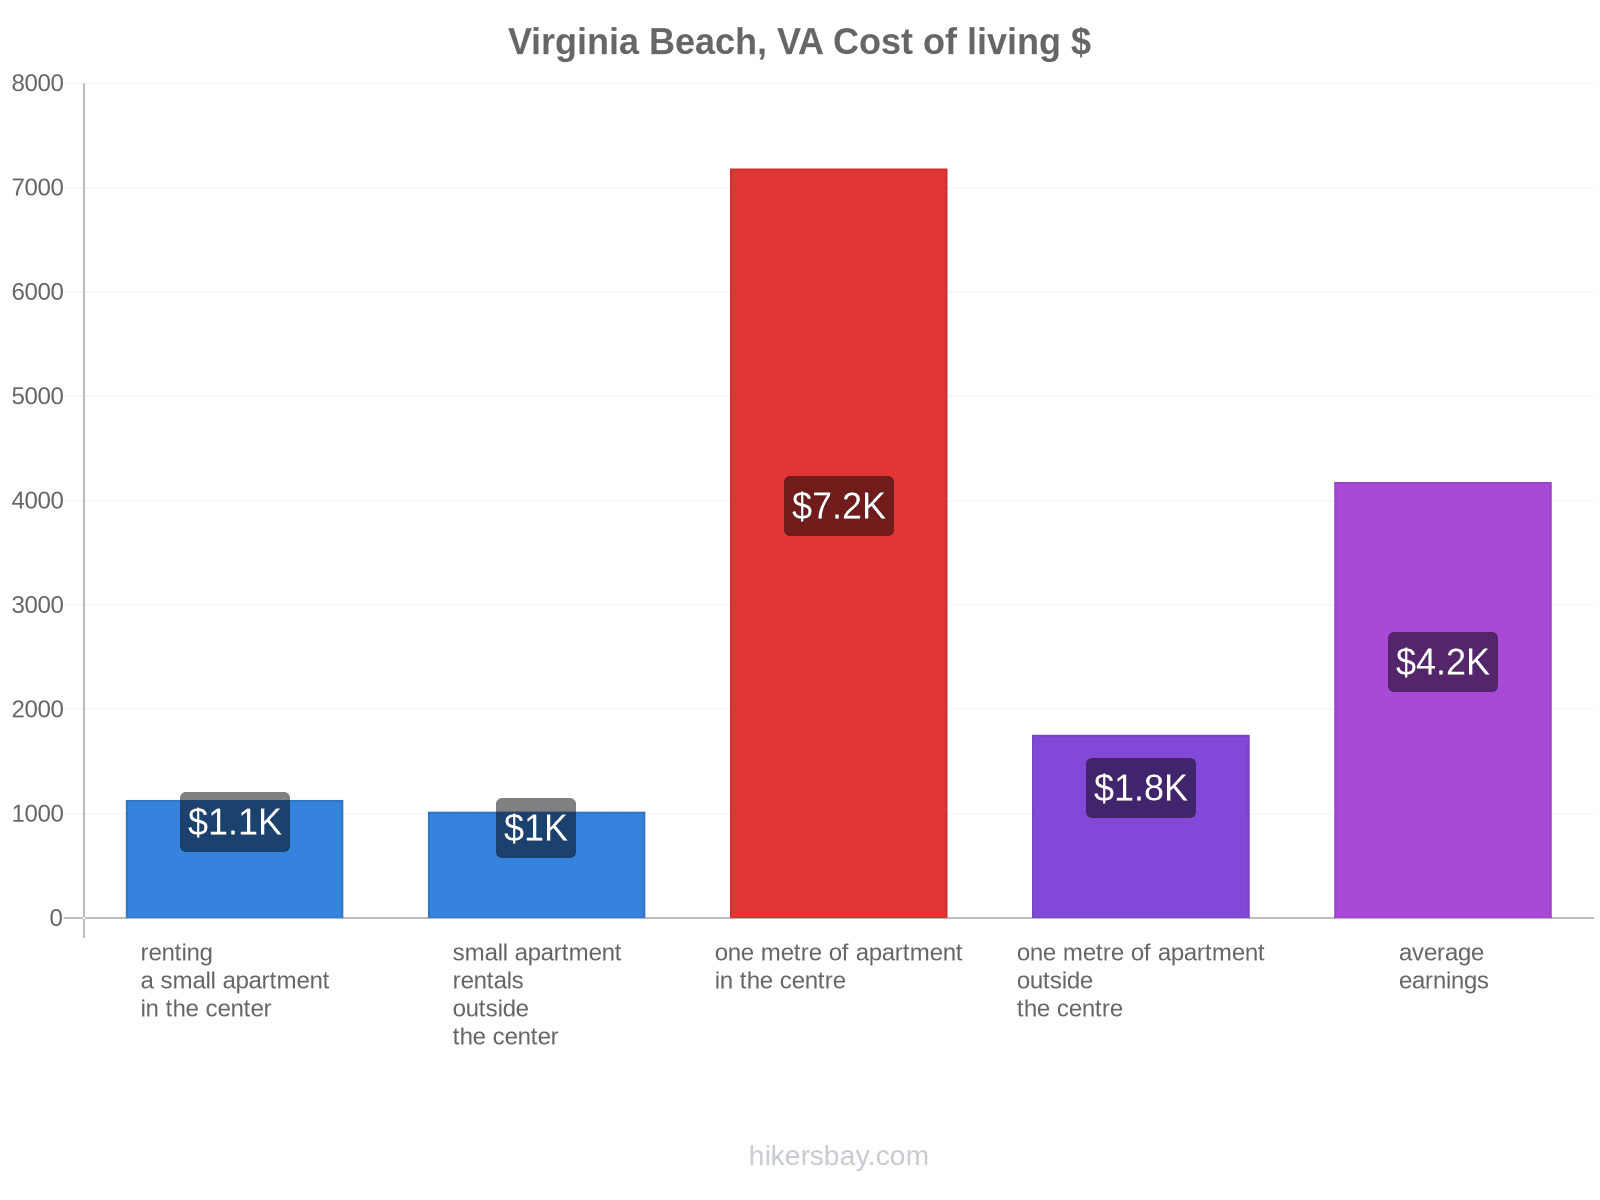 Virginia Beach, VA cost of living hikersbay.com